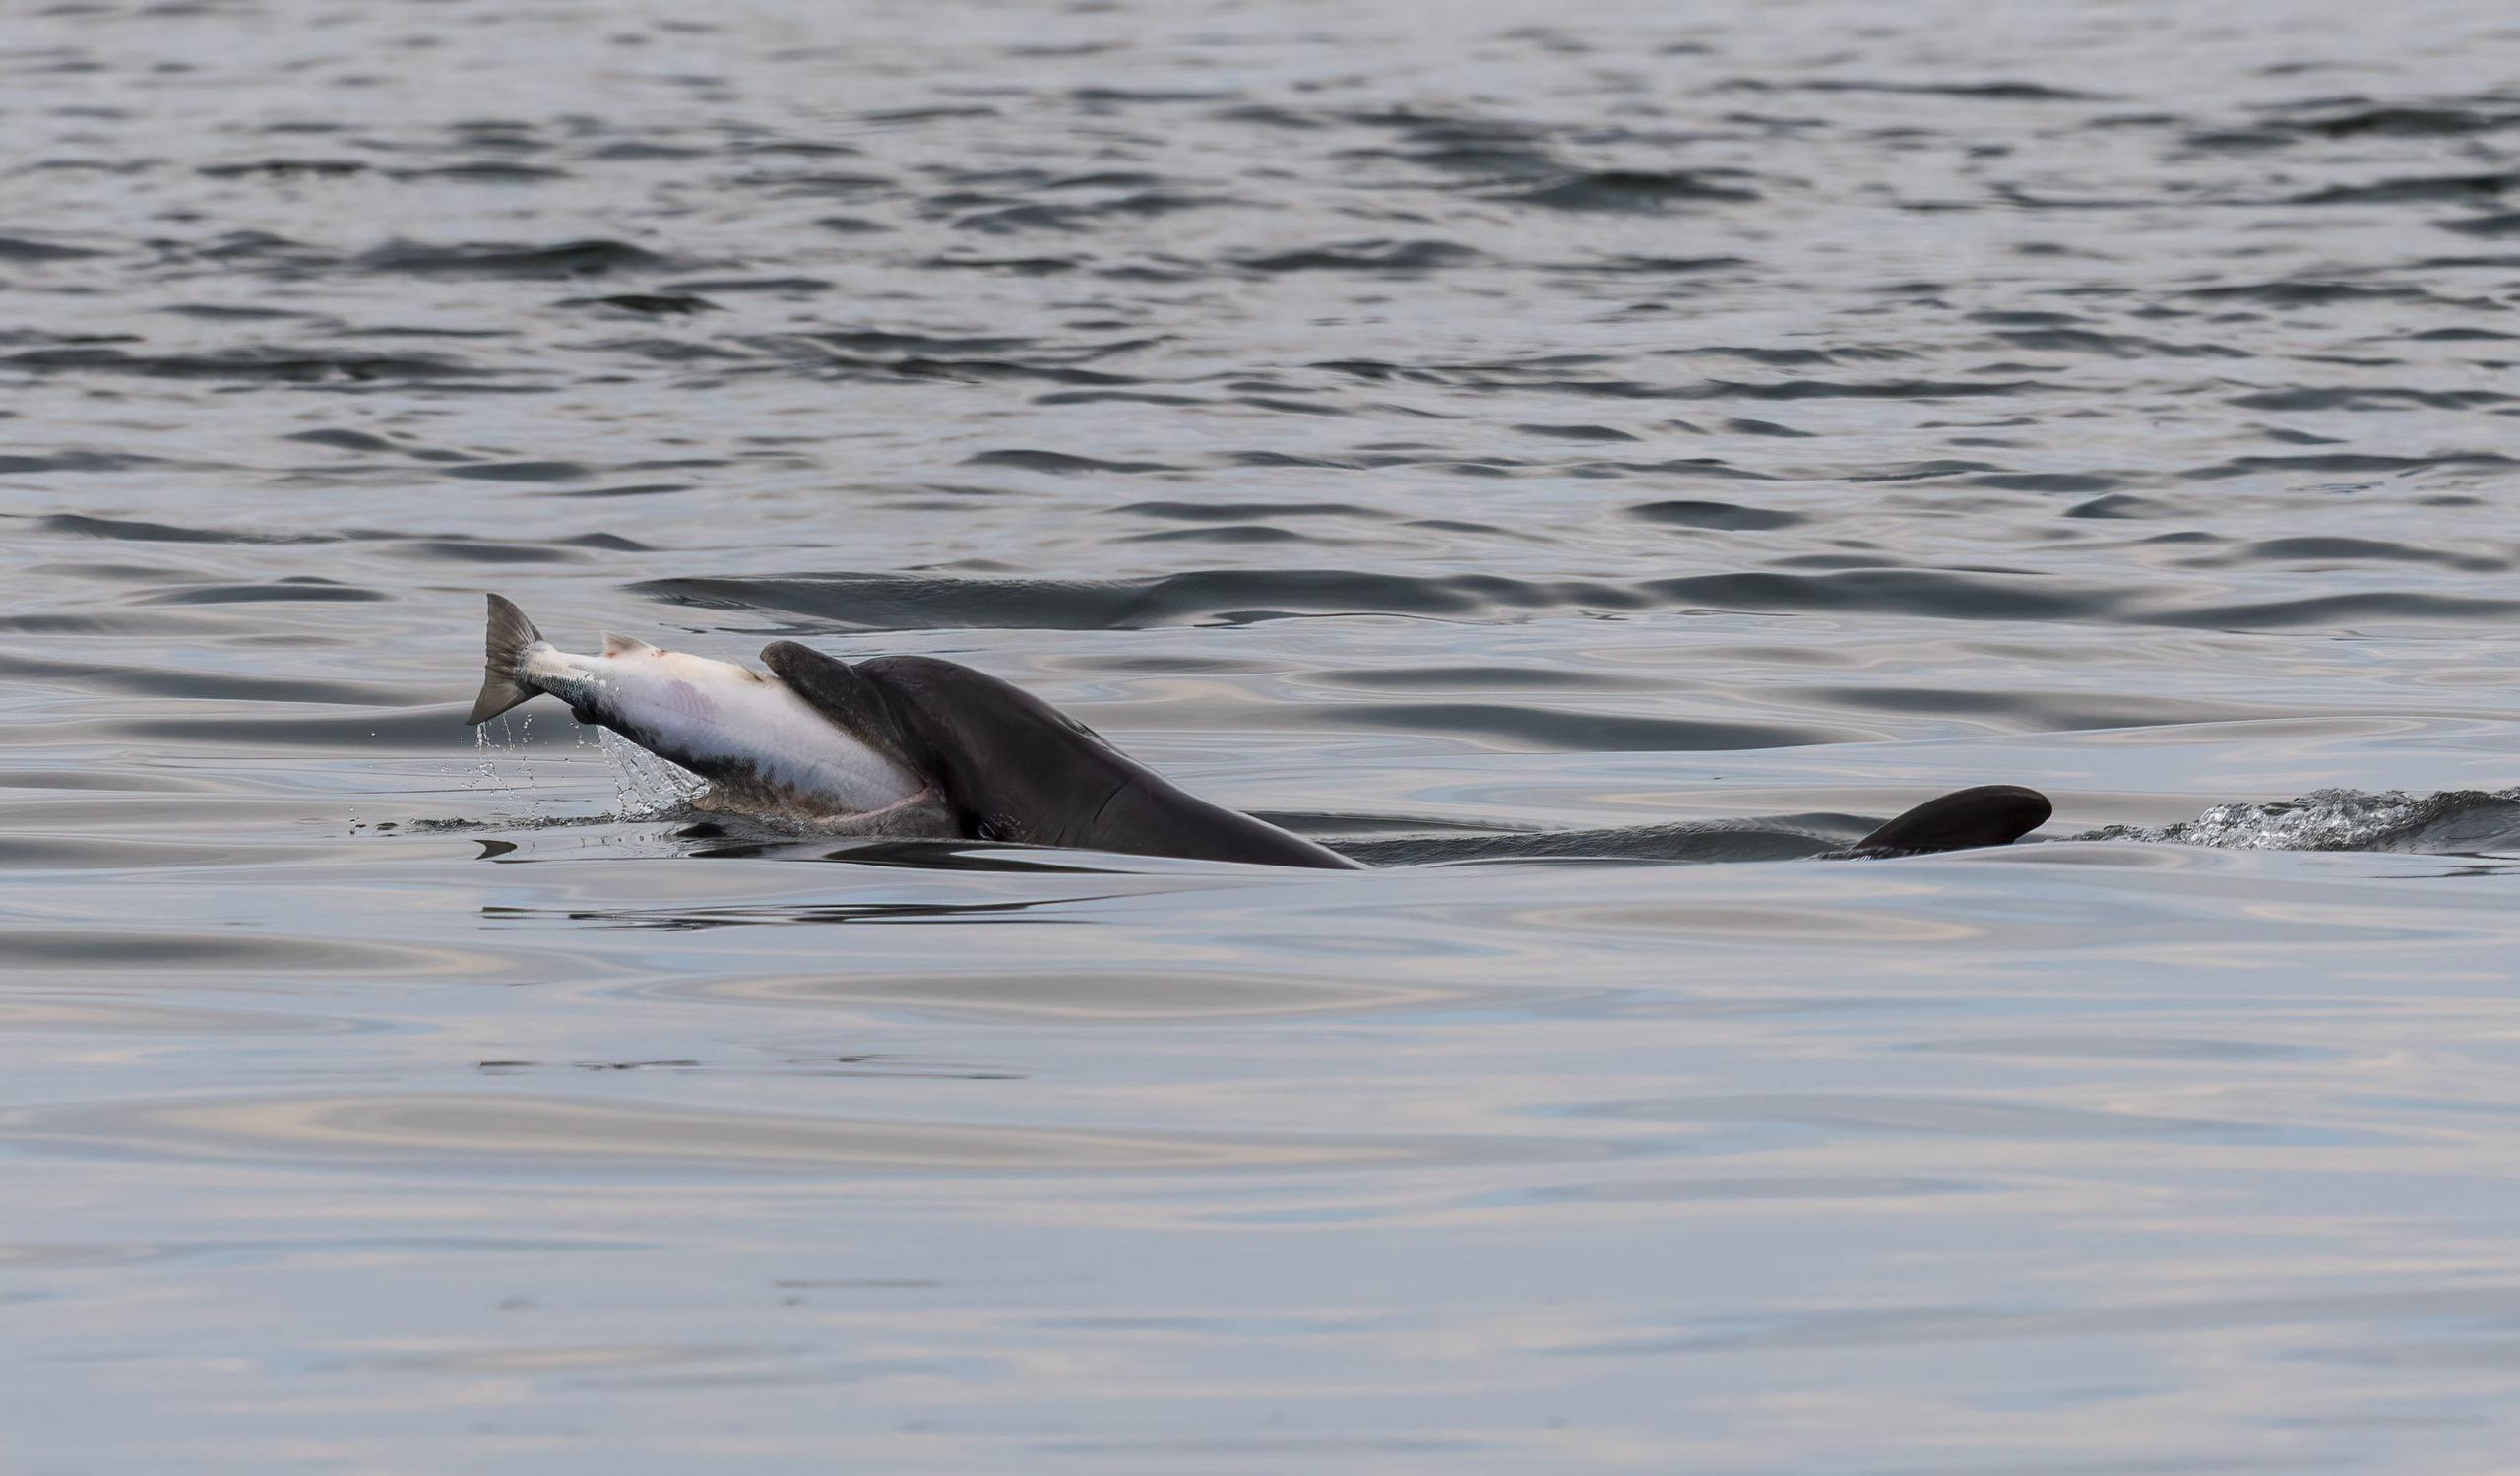 Common bottlenose dolphin eating fish